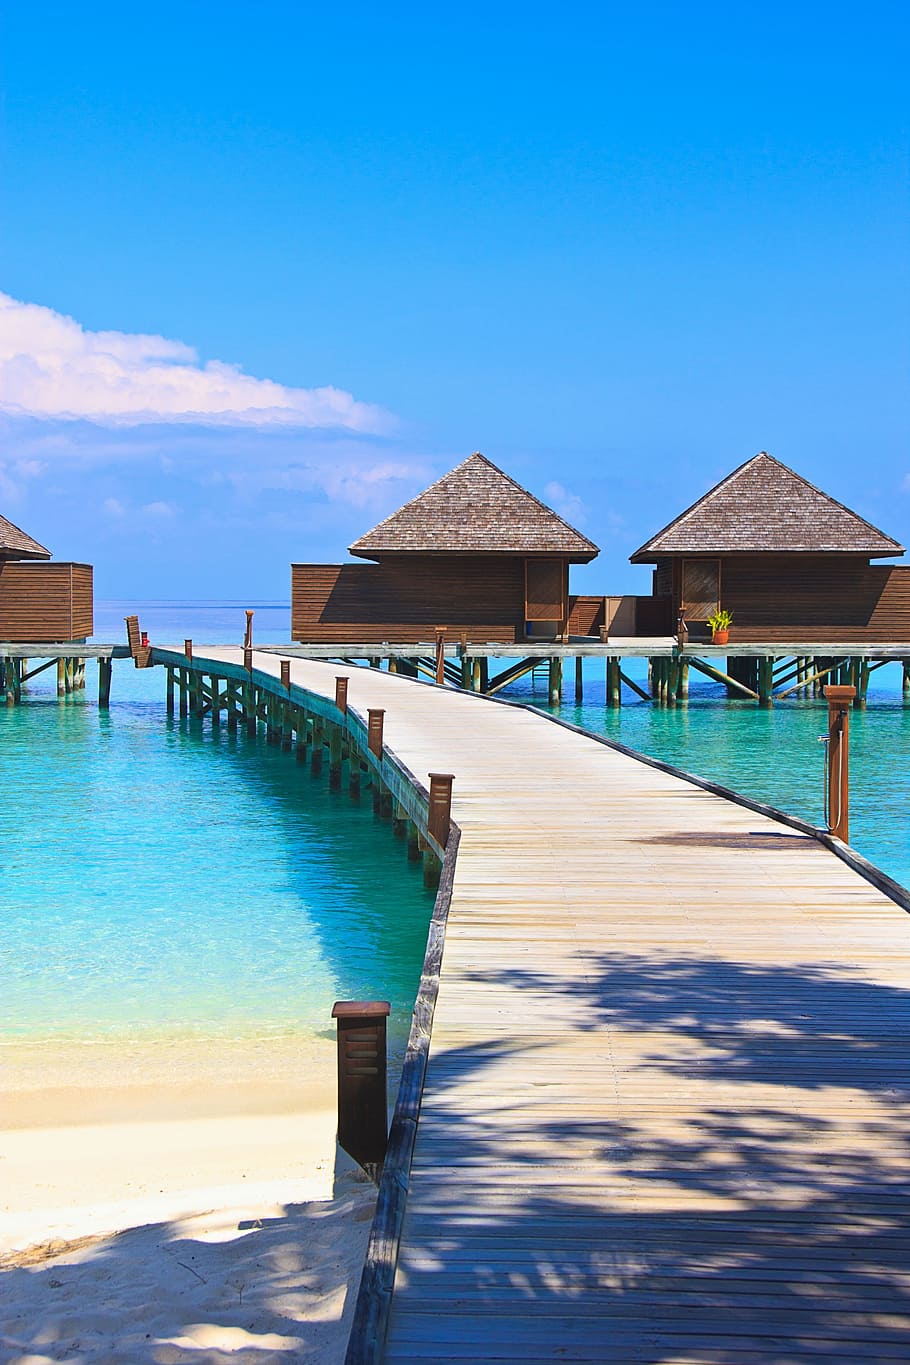 maldives cottages, veligandu island, maldives, ocean, island, lagoon, tourism, relaxation, architecture, sky